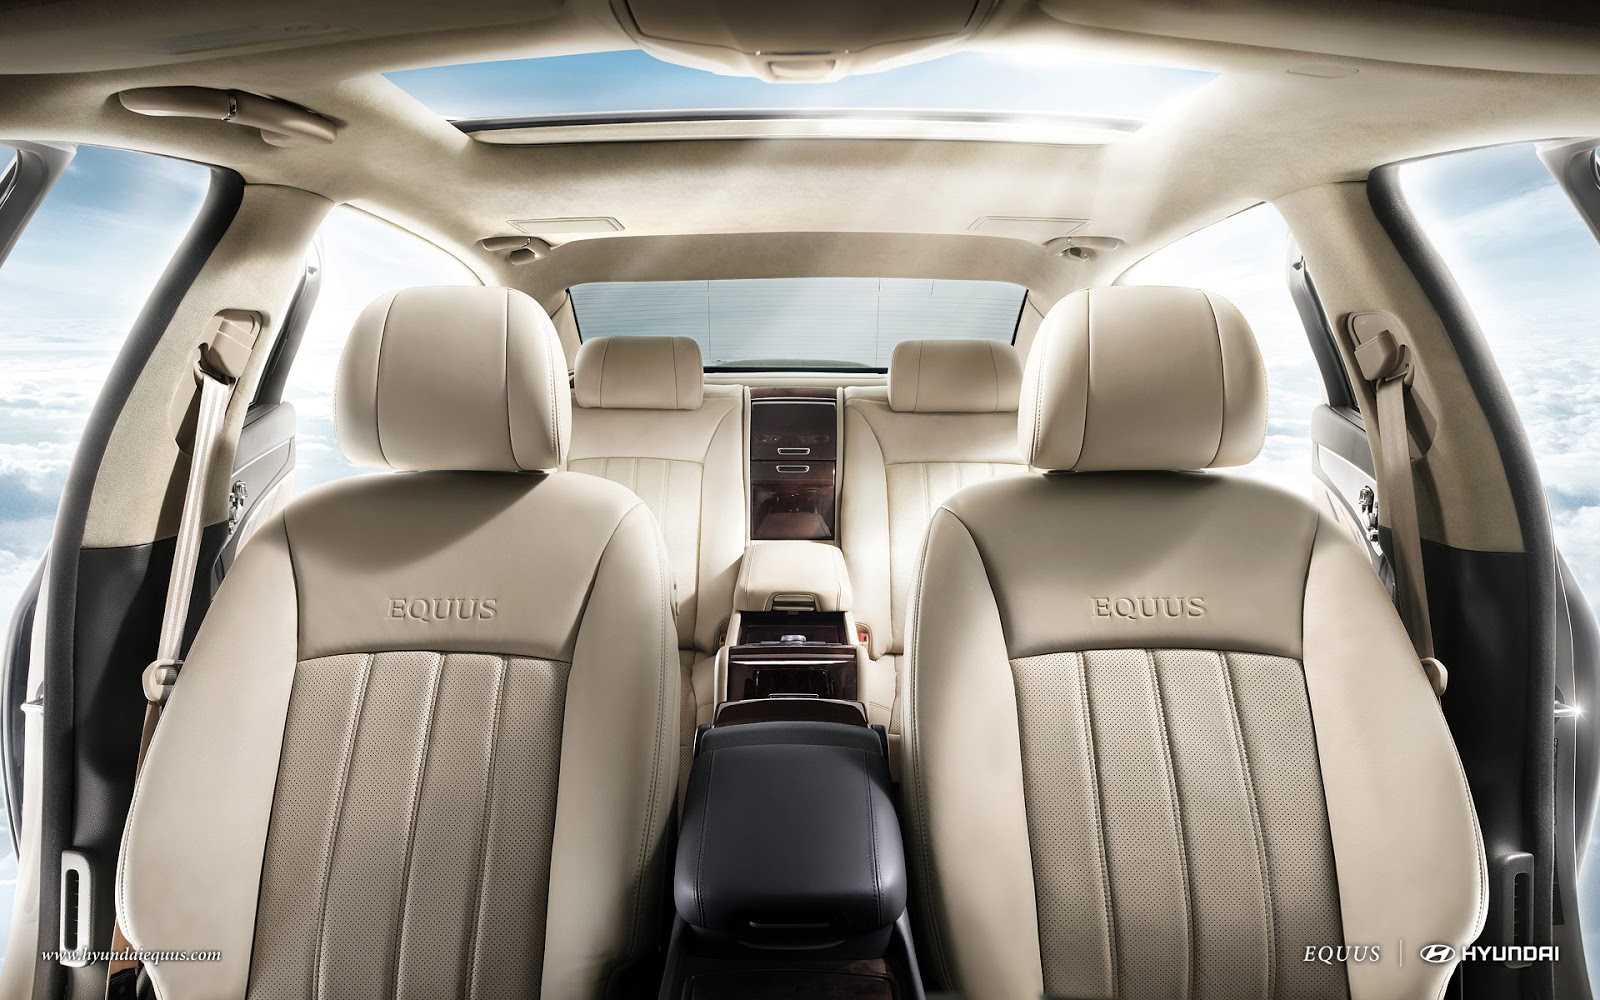 Equus_Hyundai_+2013_Wallpaper_Interior-rear-front-seats-sunroof.jpg